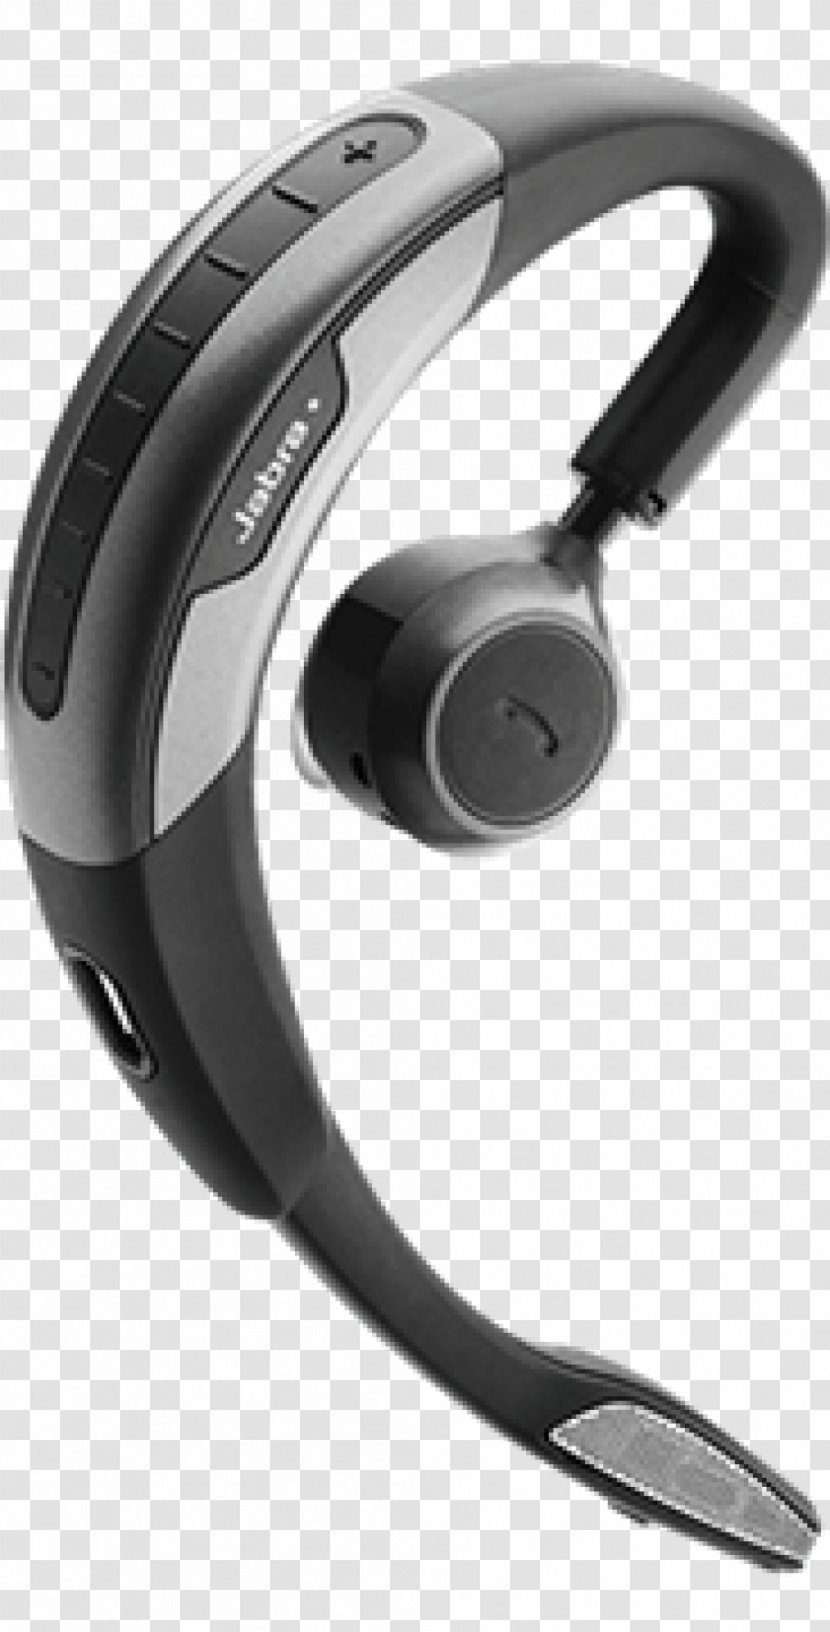 Jabra Motion Headphones Mobile Phones Xbox 360 Wireless Headset Transparent PNG